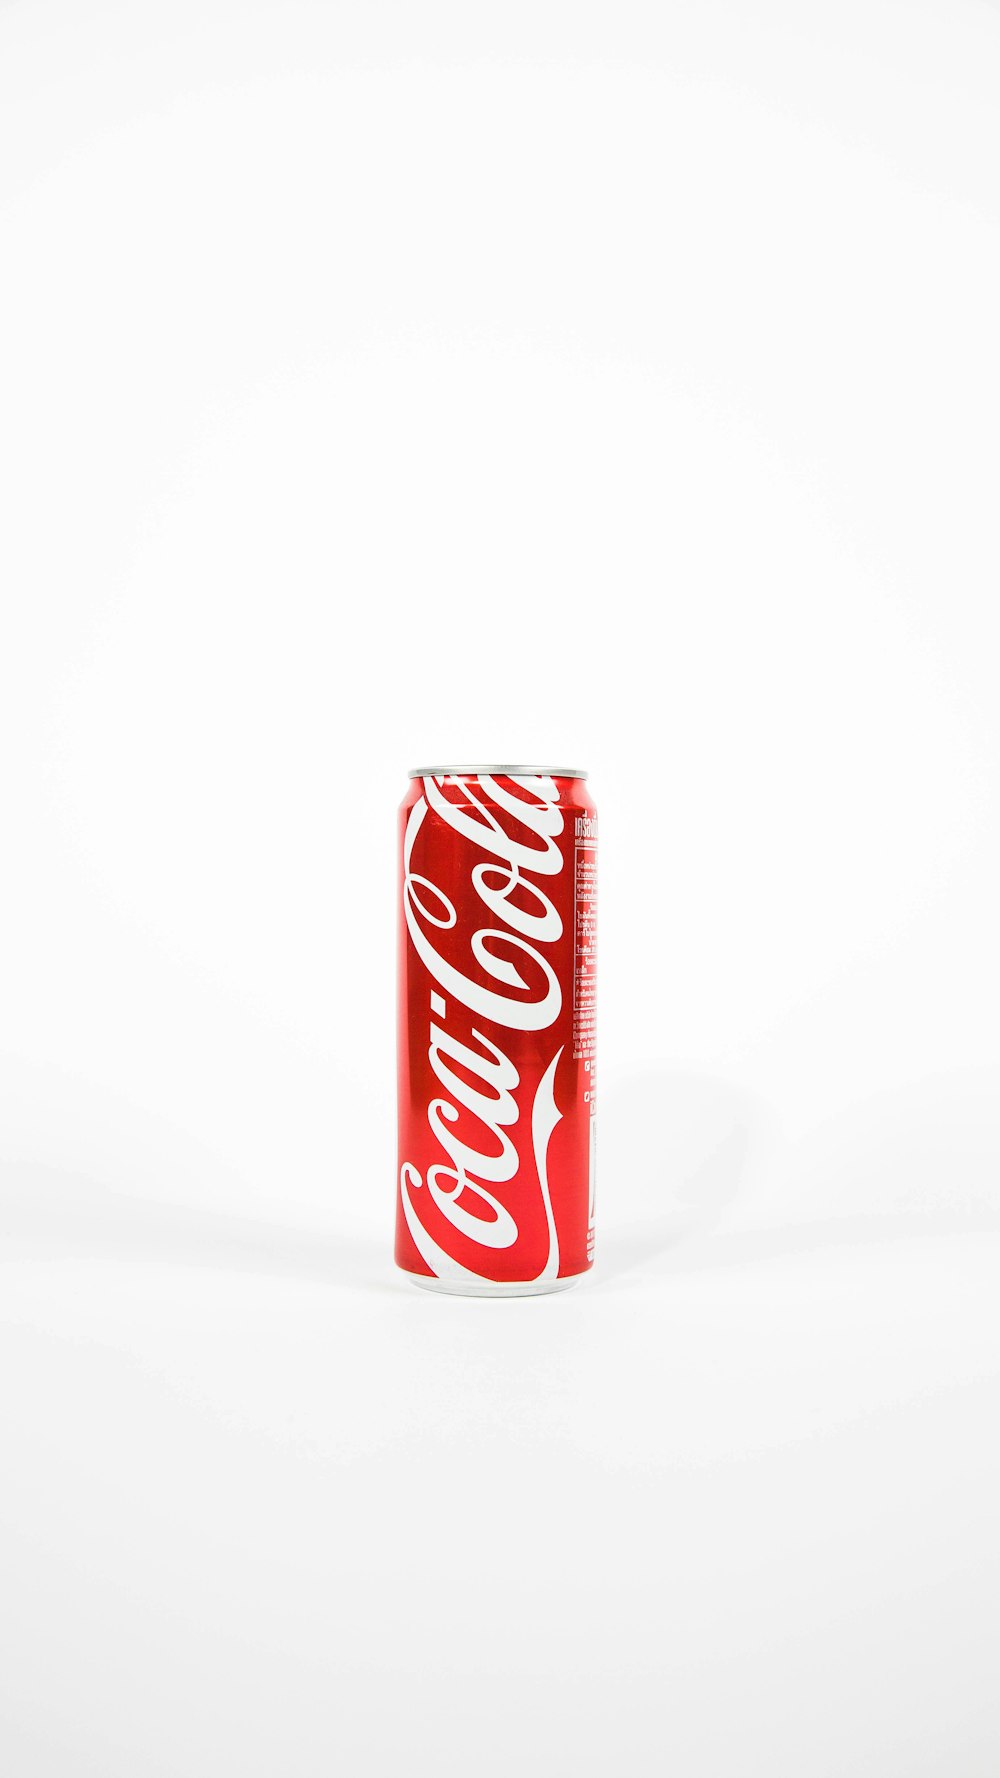 lata vermelha de Coca-Cola